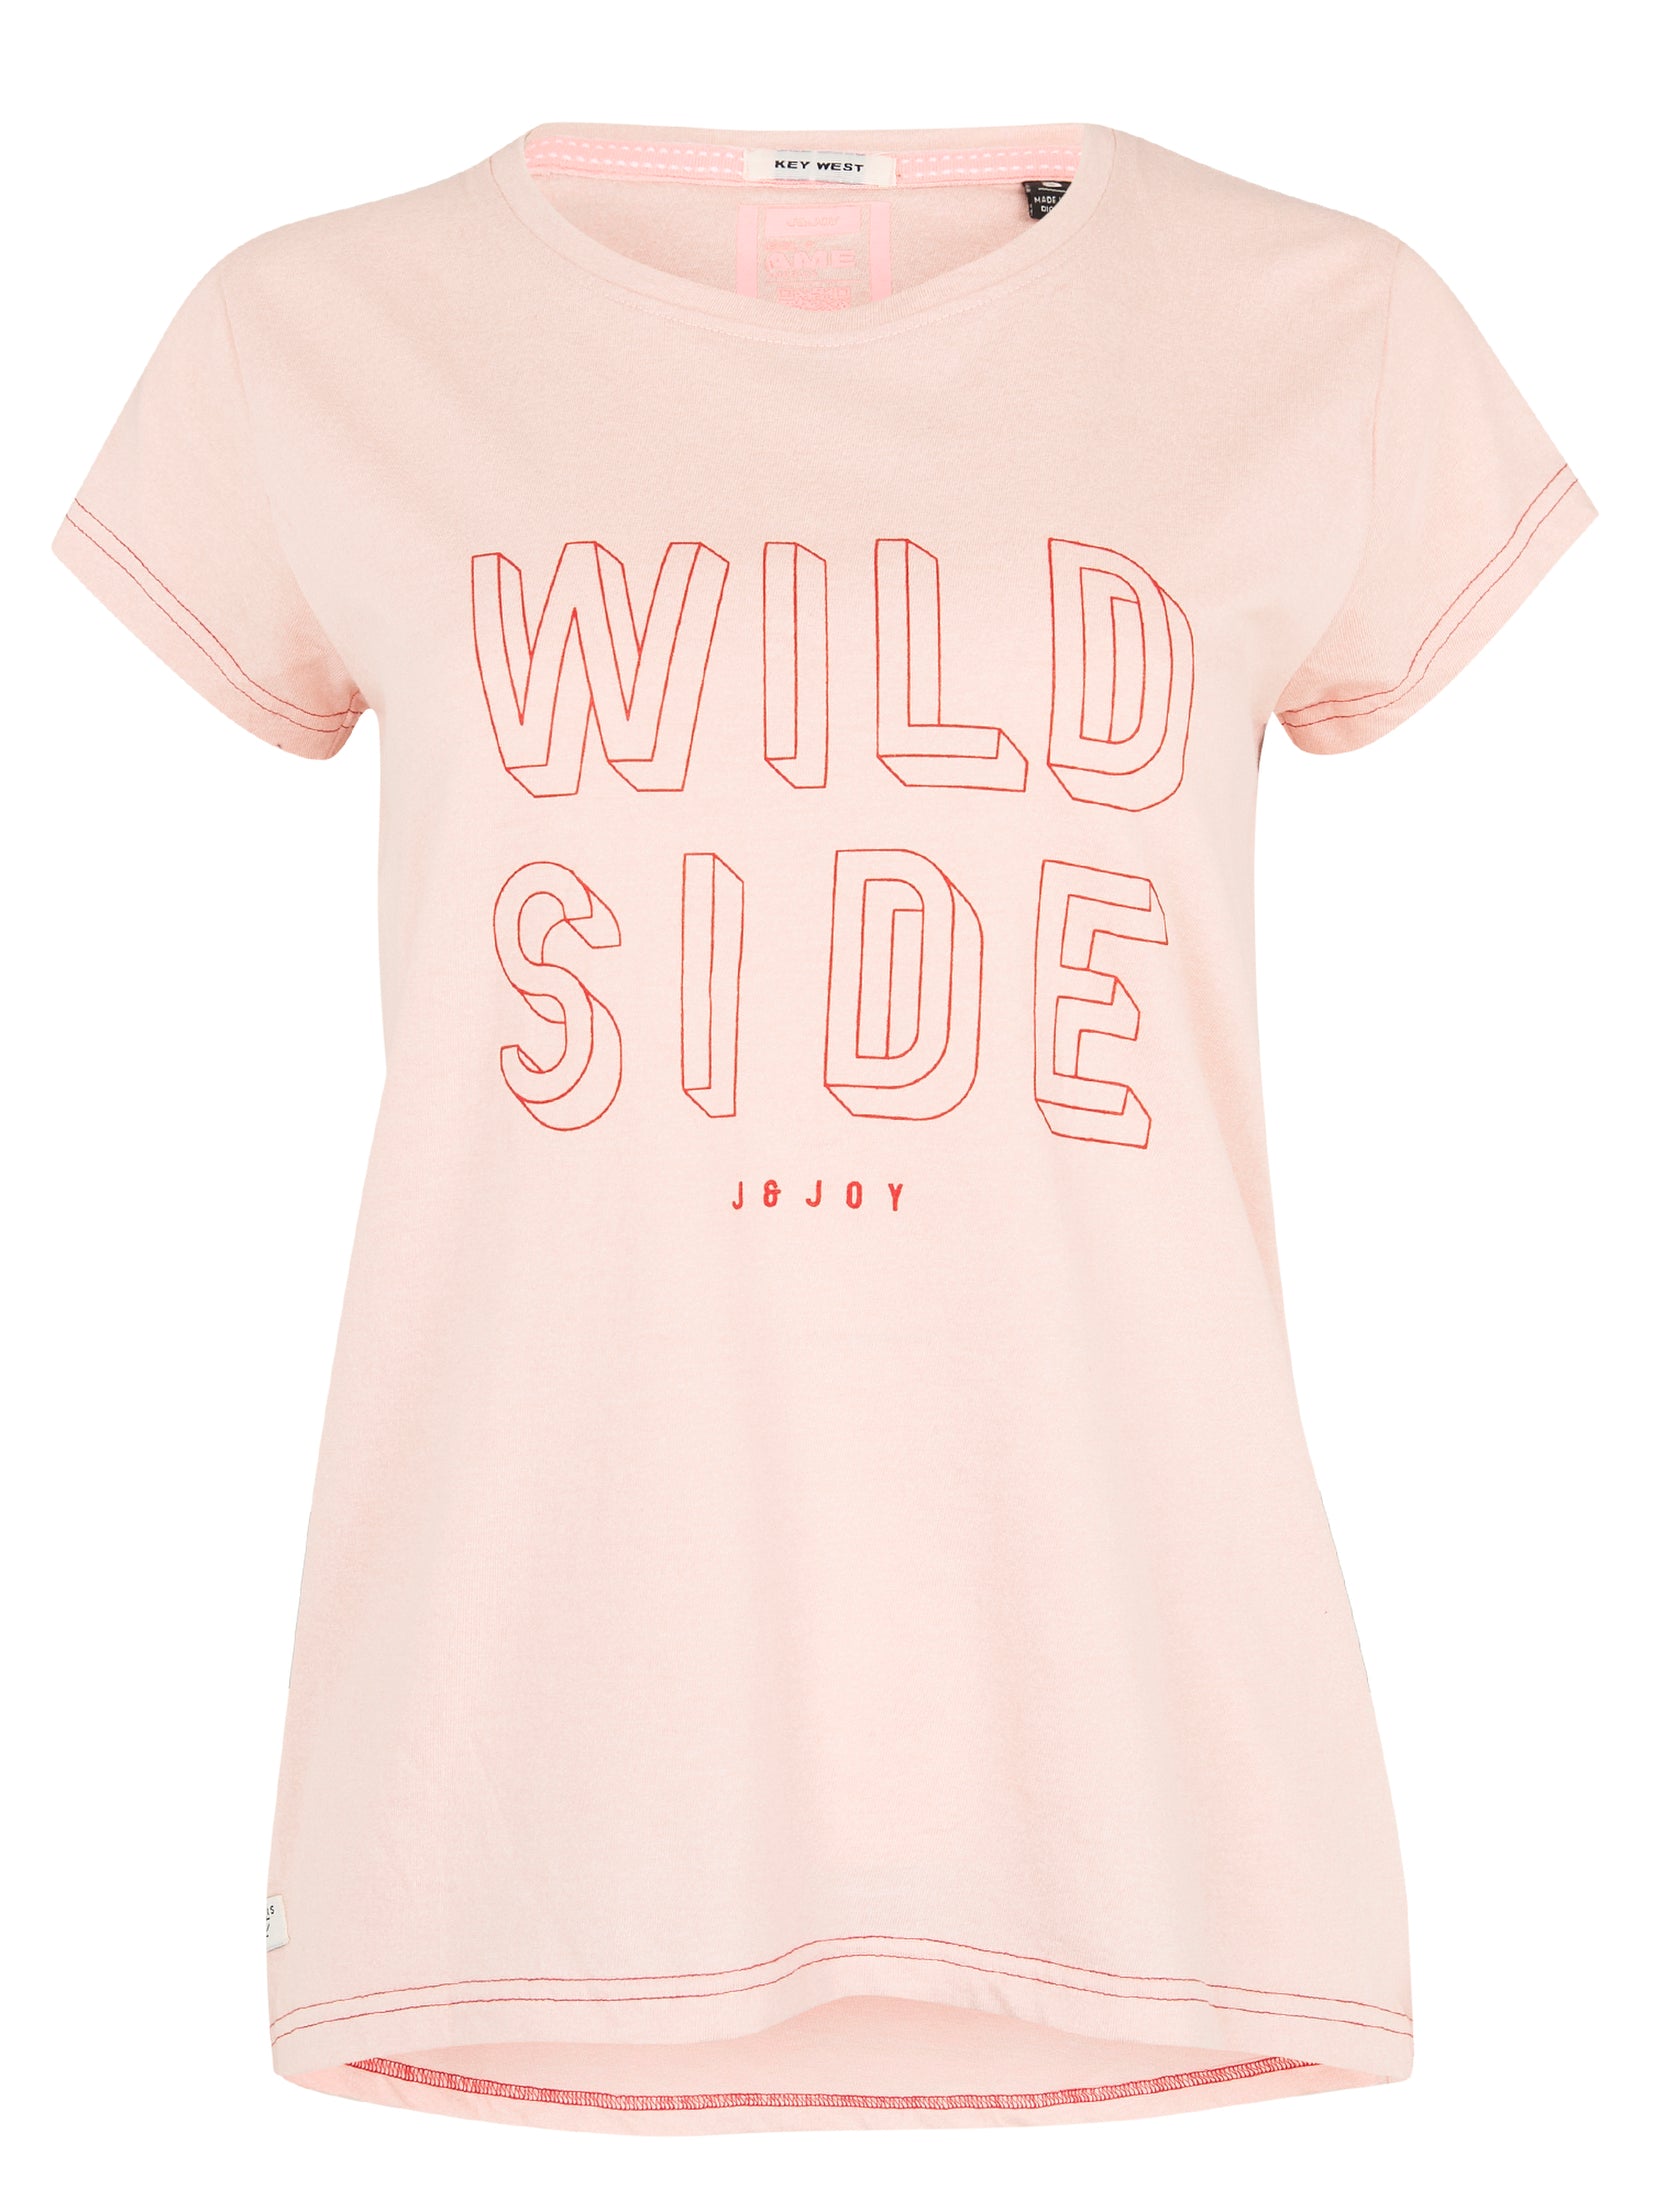 T-shirt Femme 07 Sunny Day Wild Side | J&JOY.